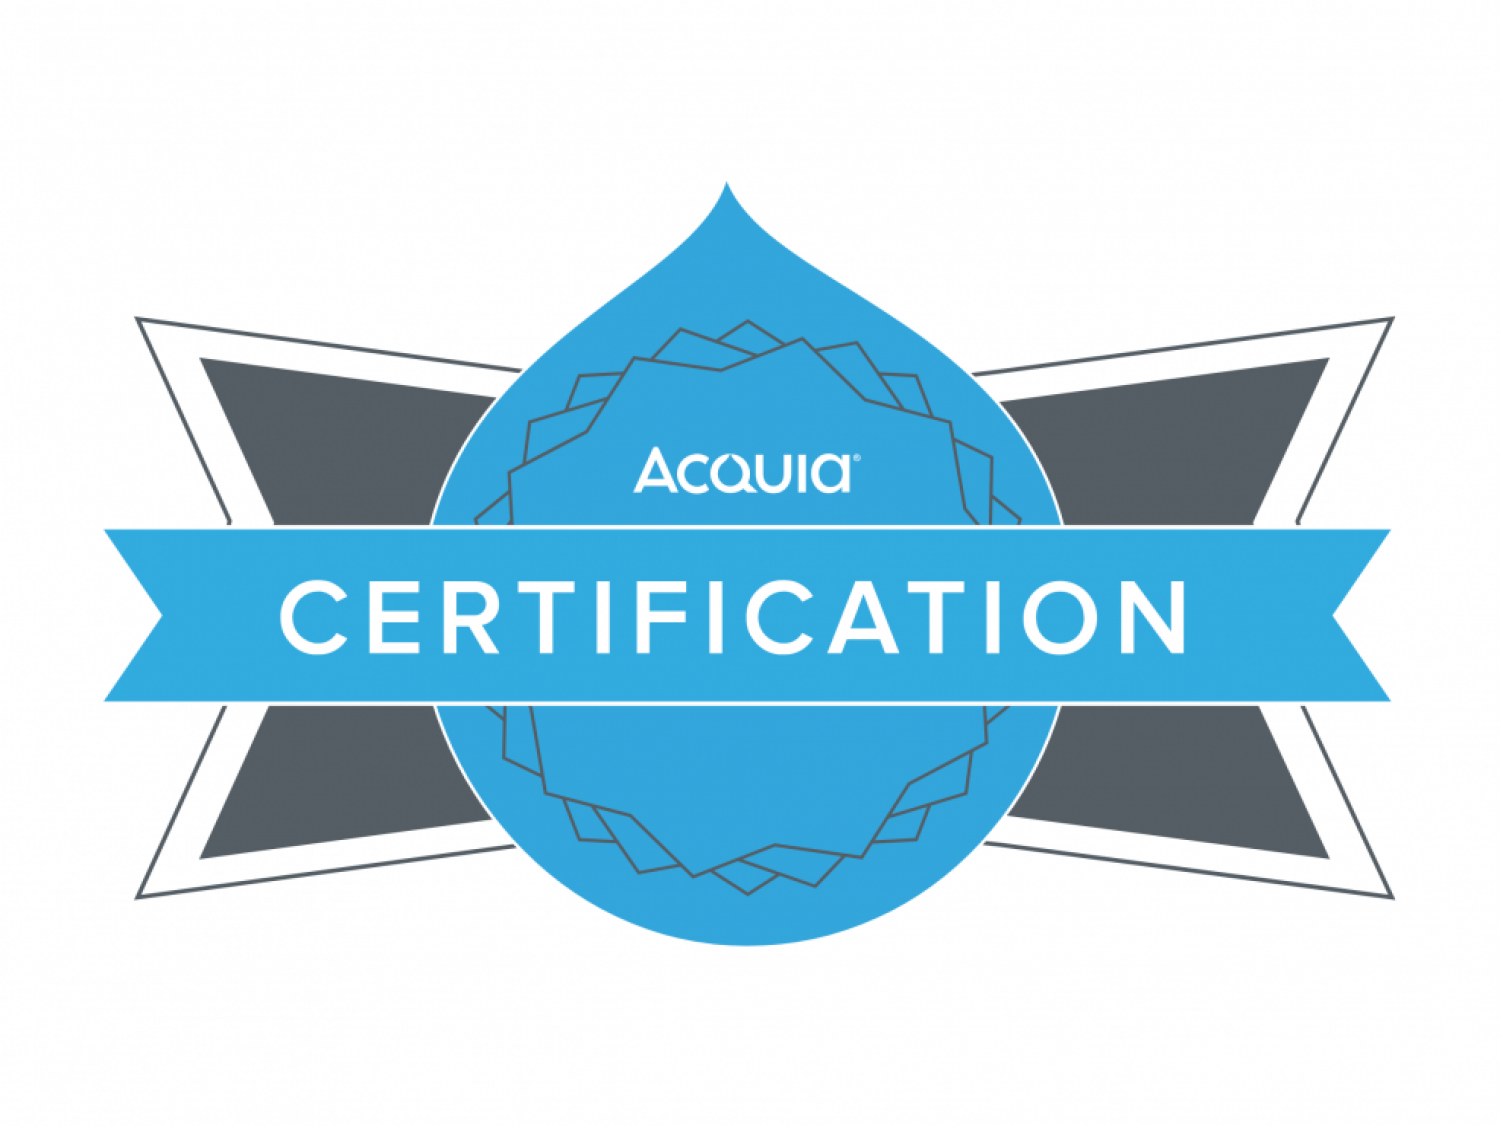 Acquia Certification Program